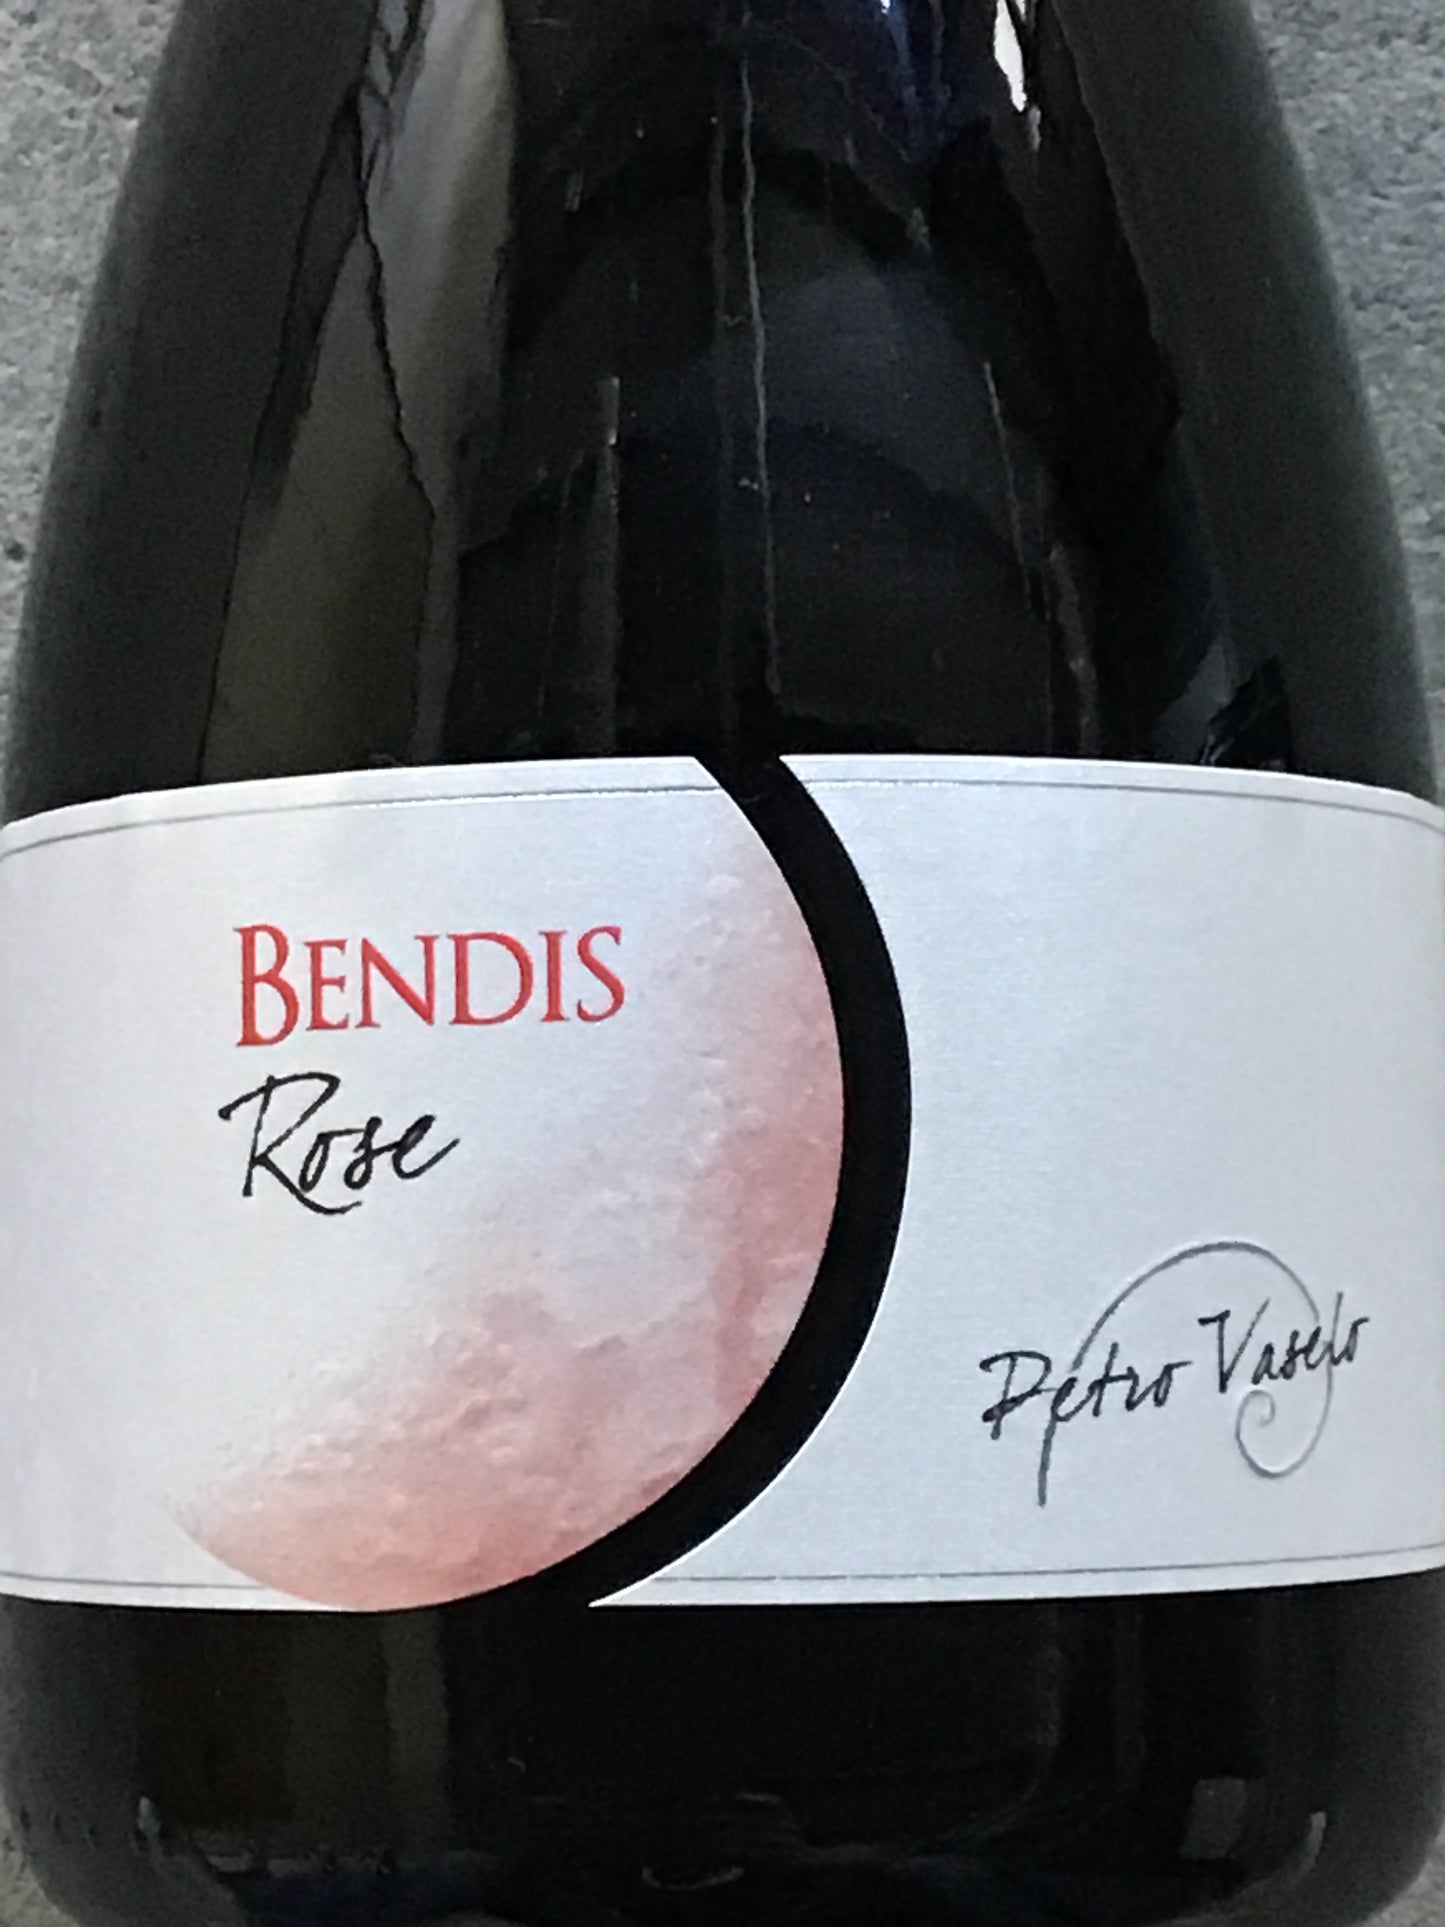 Petro Vaselo 'Bendis' - Pinot Noir Sparkling Rosé - Romania